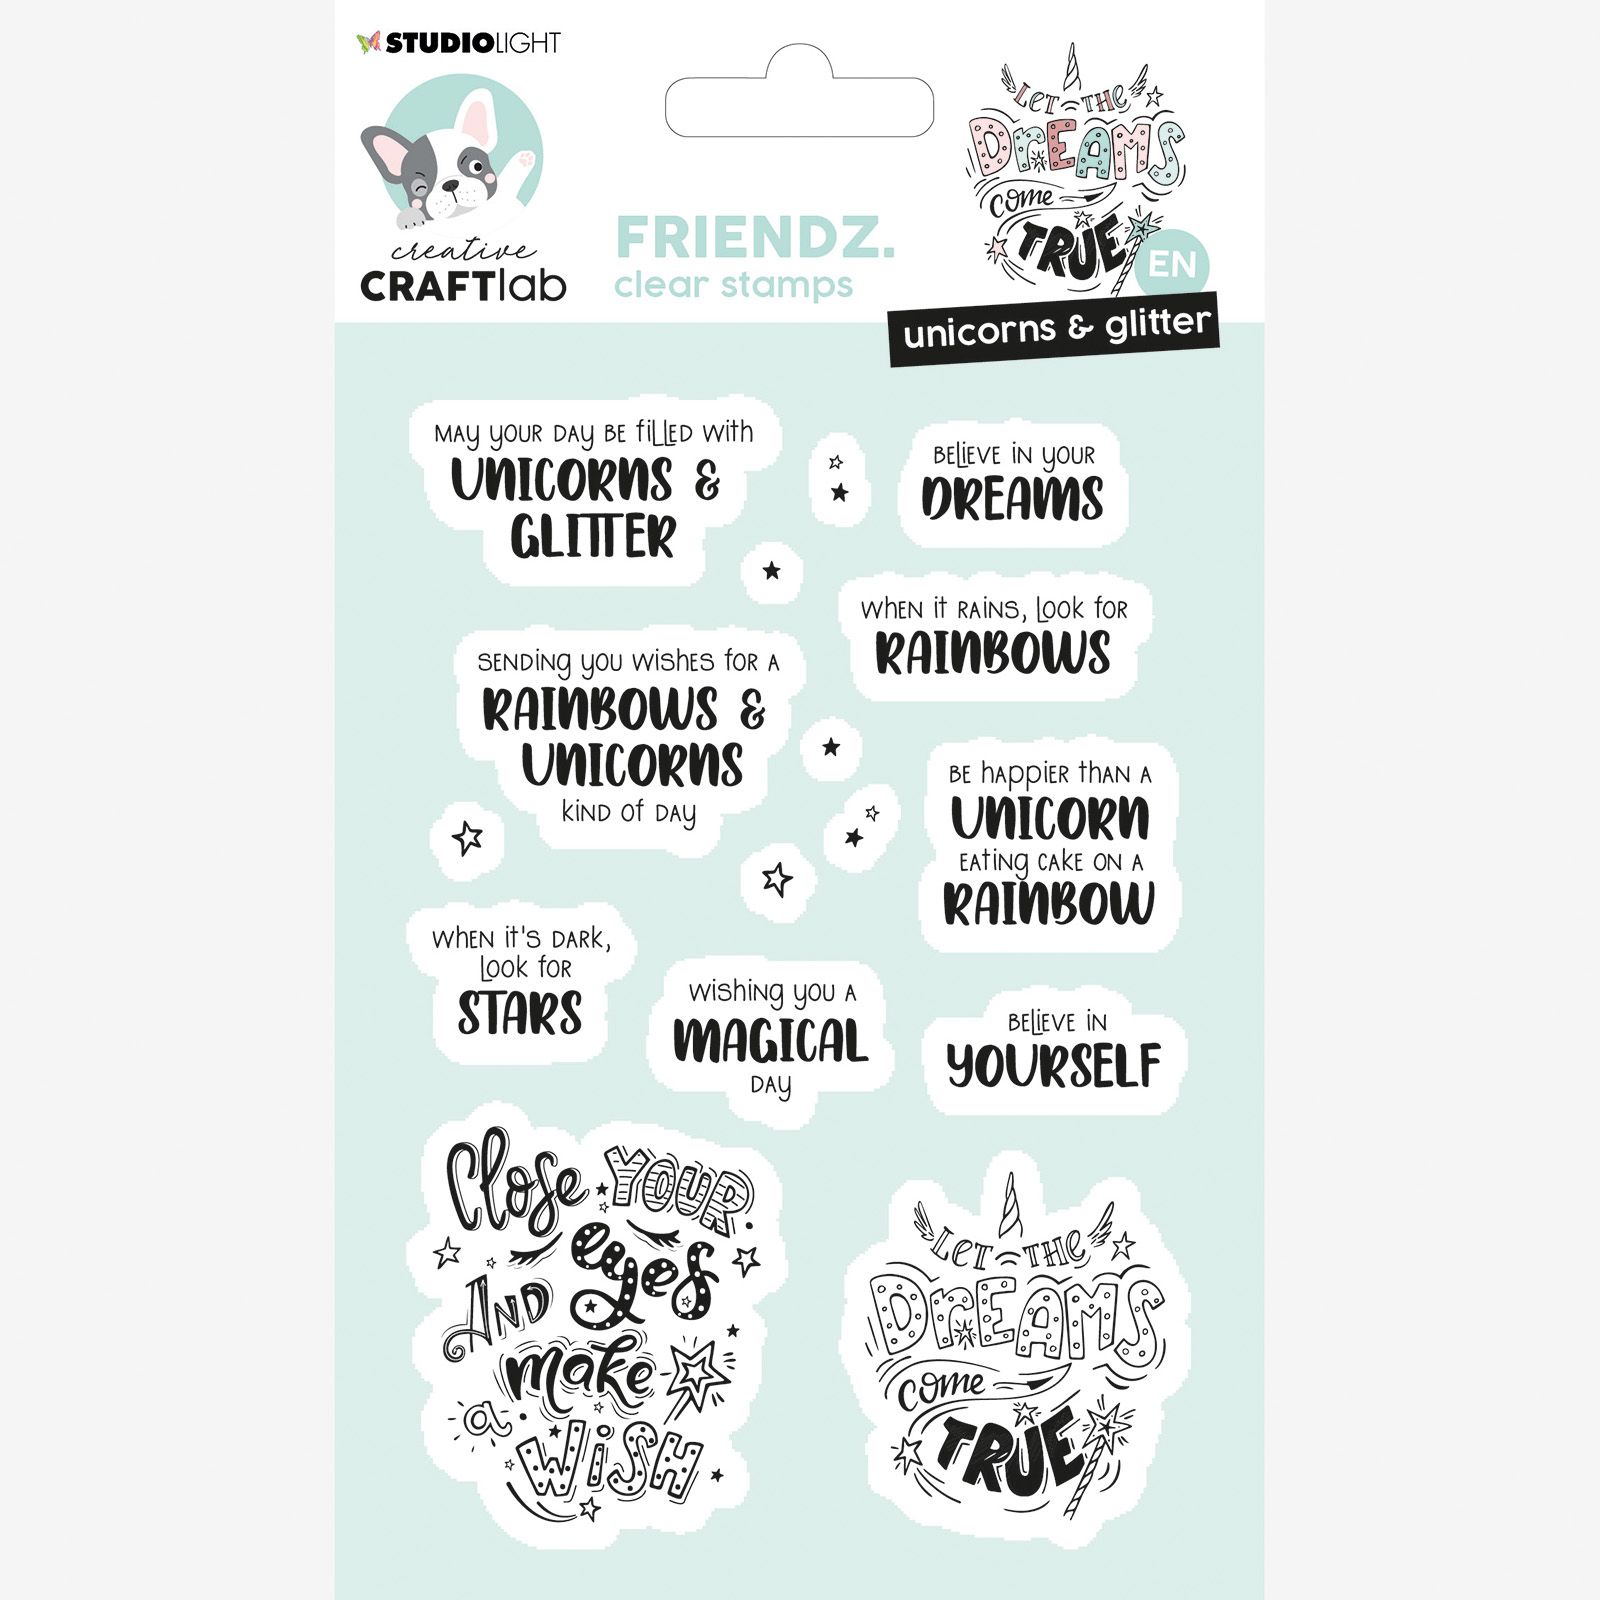 Creative Craftlab • Friendz Sello Transparente Unicorns & Glitter